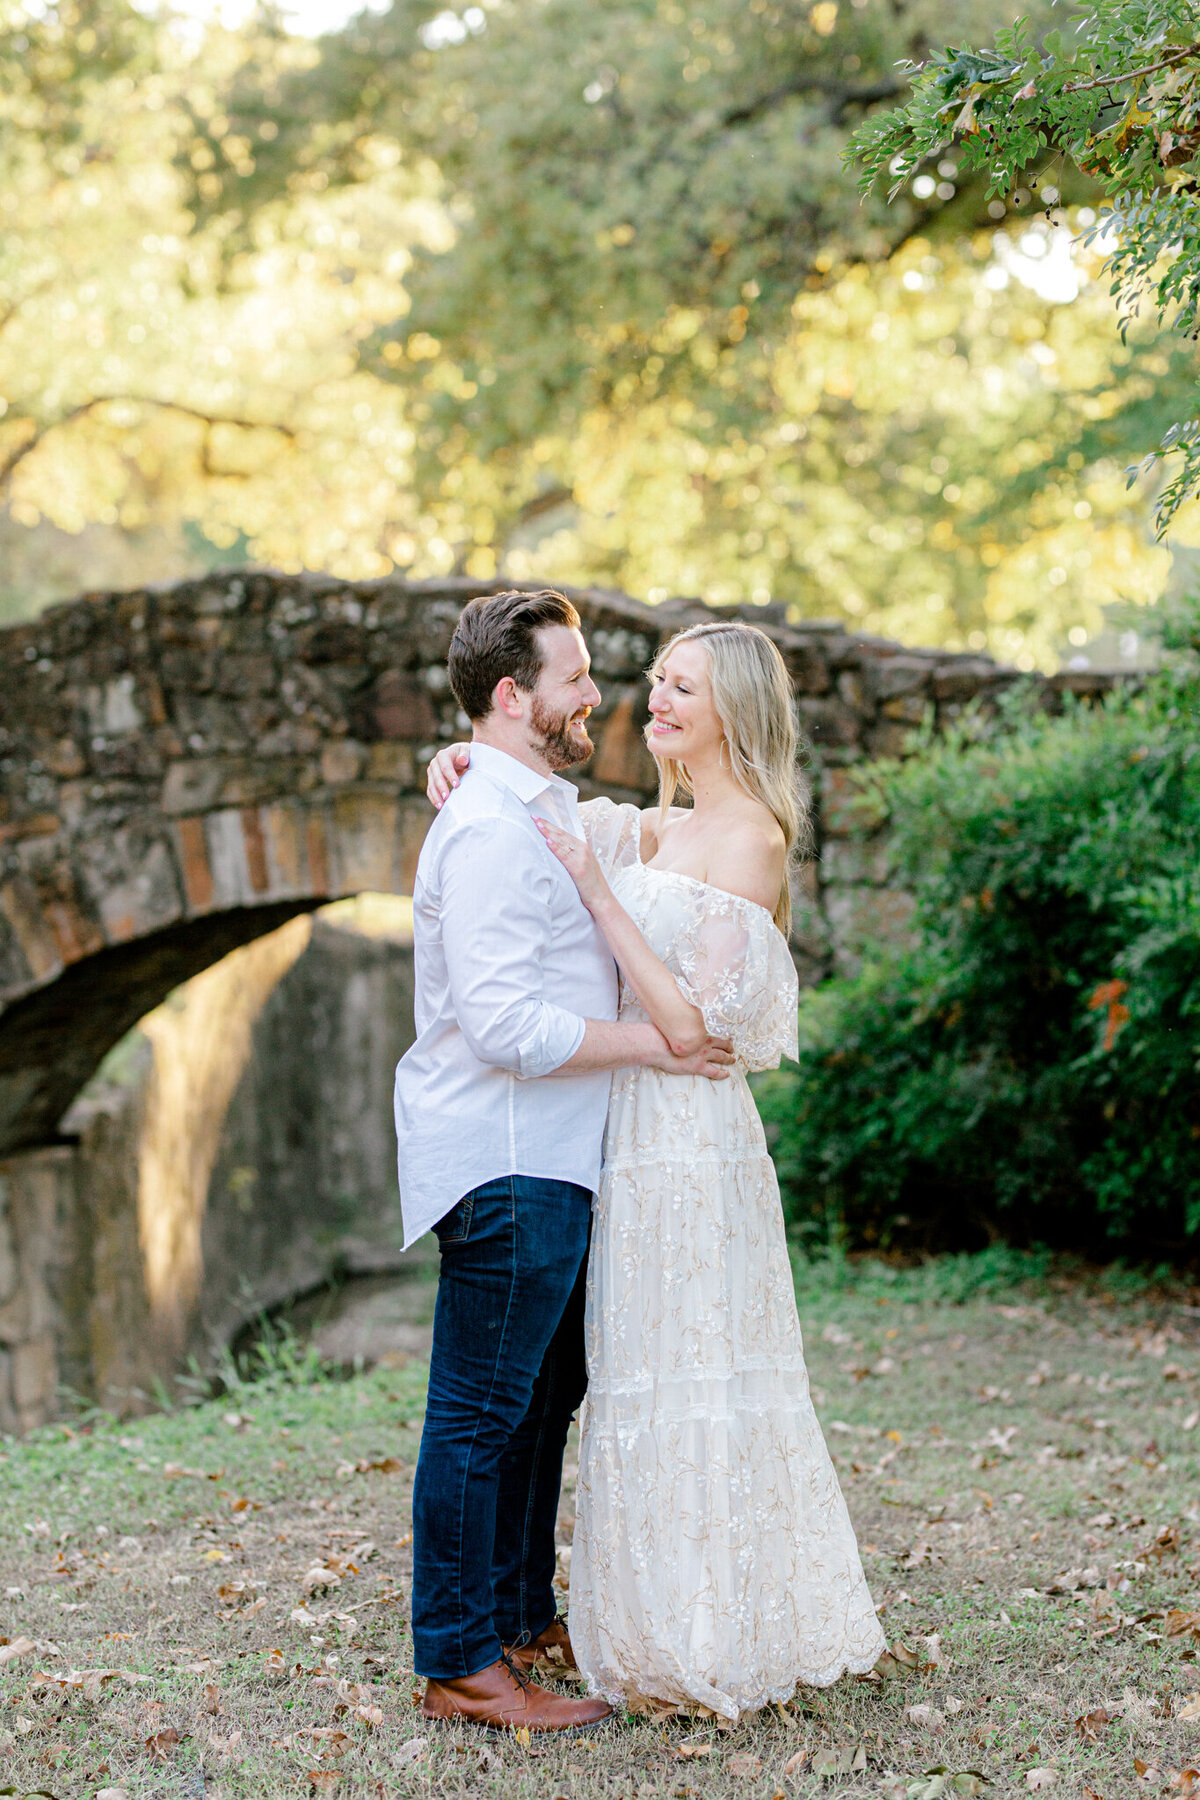 Jessica & Blake Engagement Session at Reverchon Park | Dallas Wedding Photographer-1